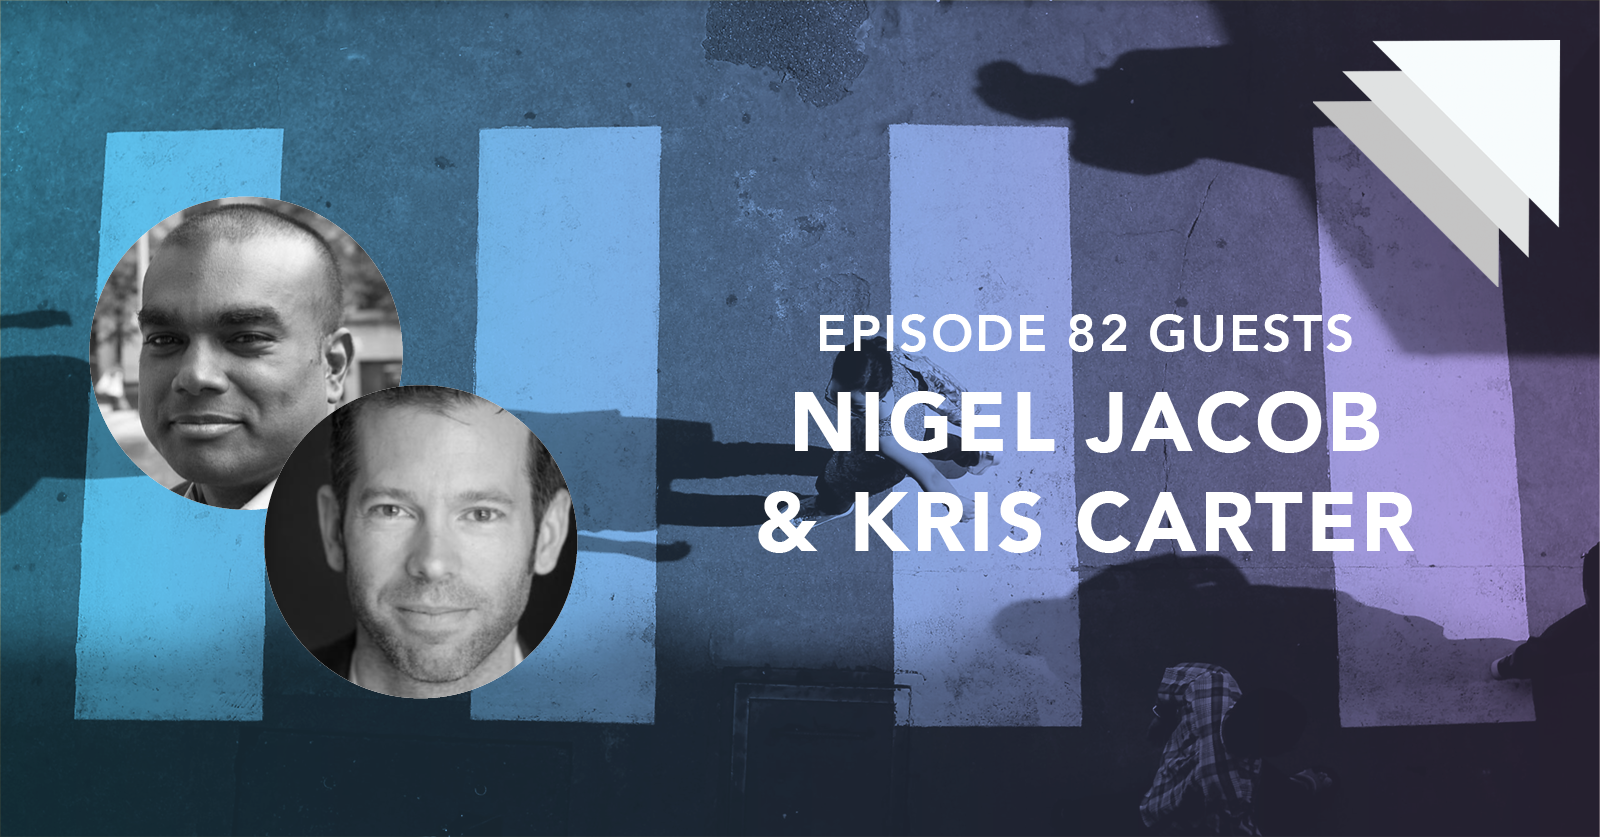 Episode 82 guests Nigel Jacob and Kris Carter